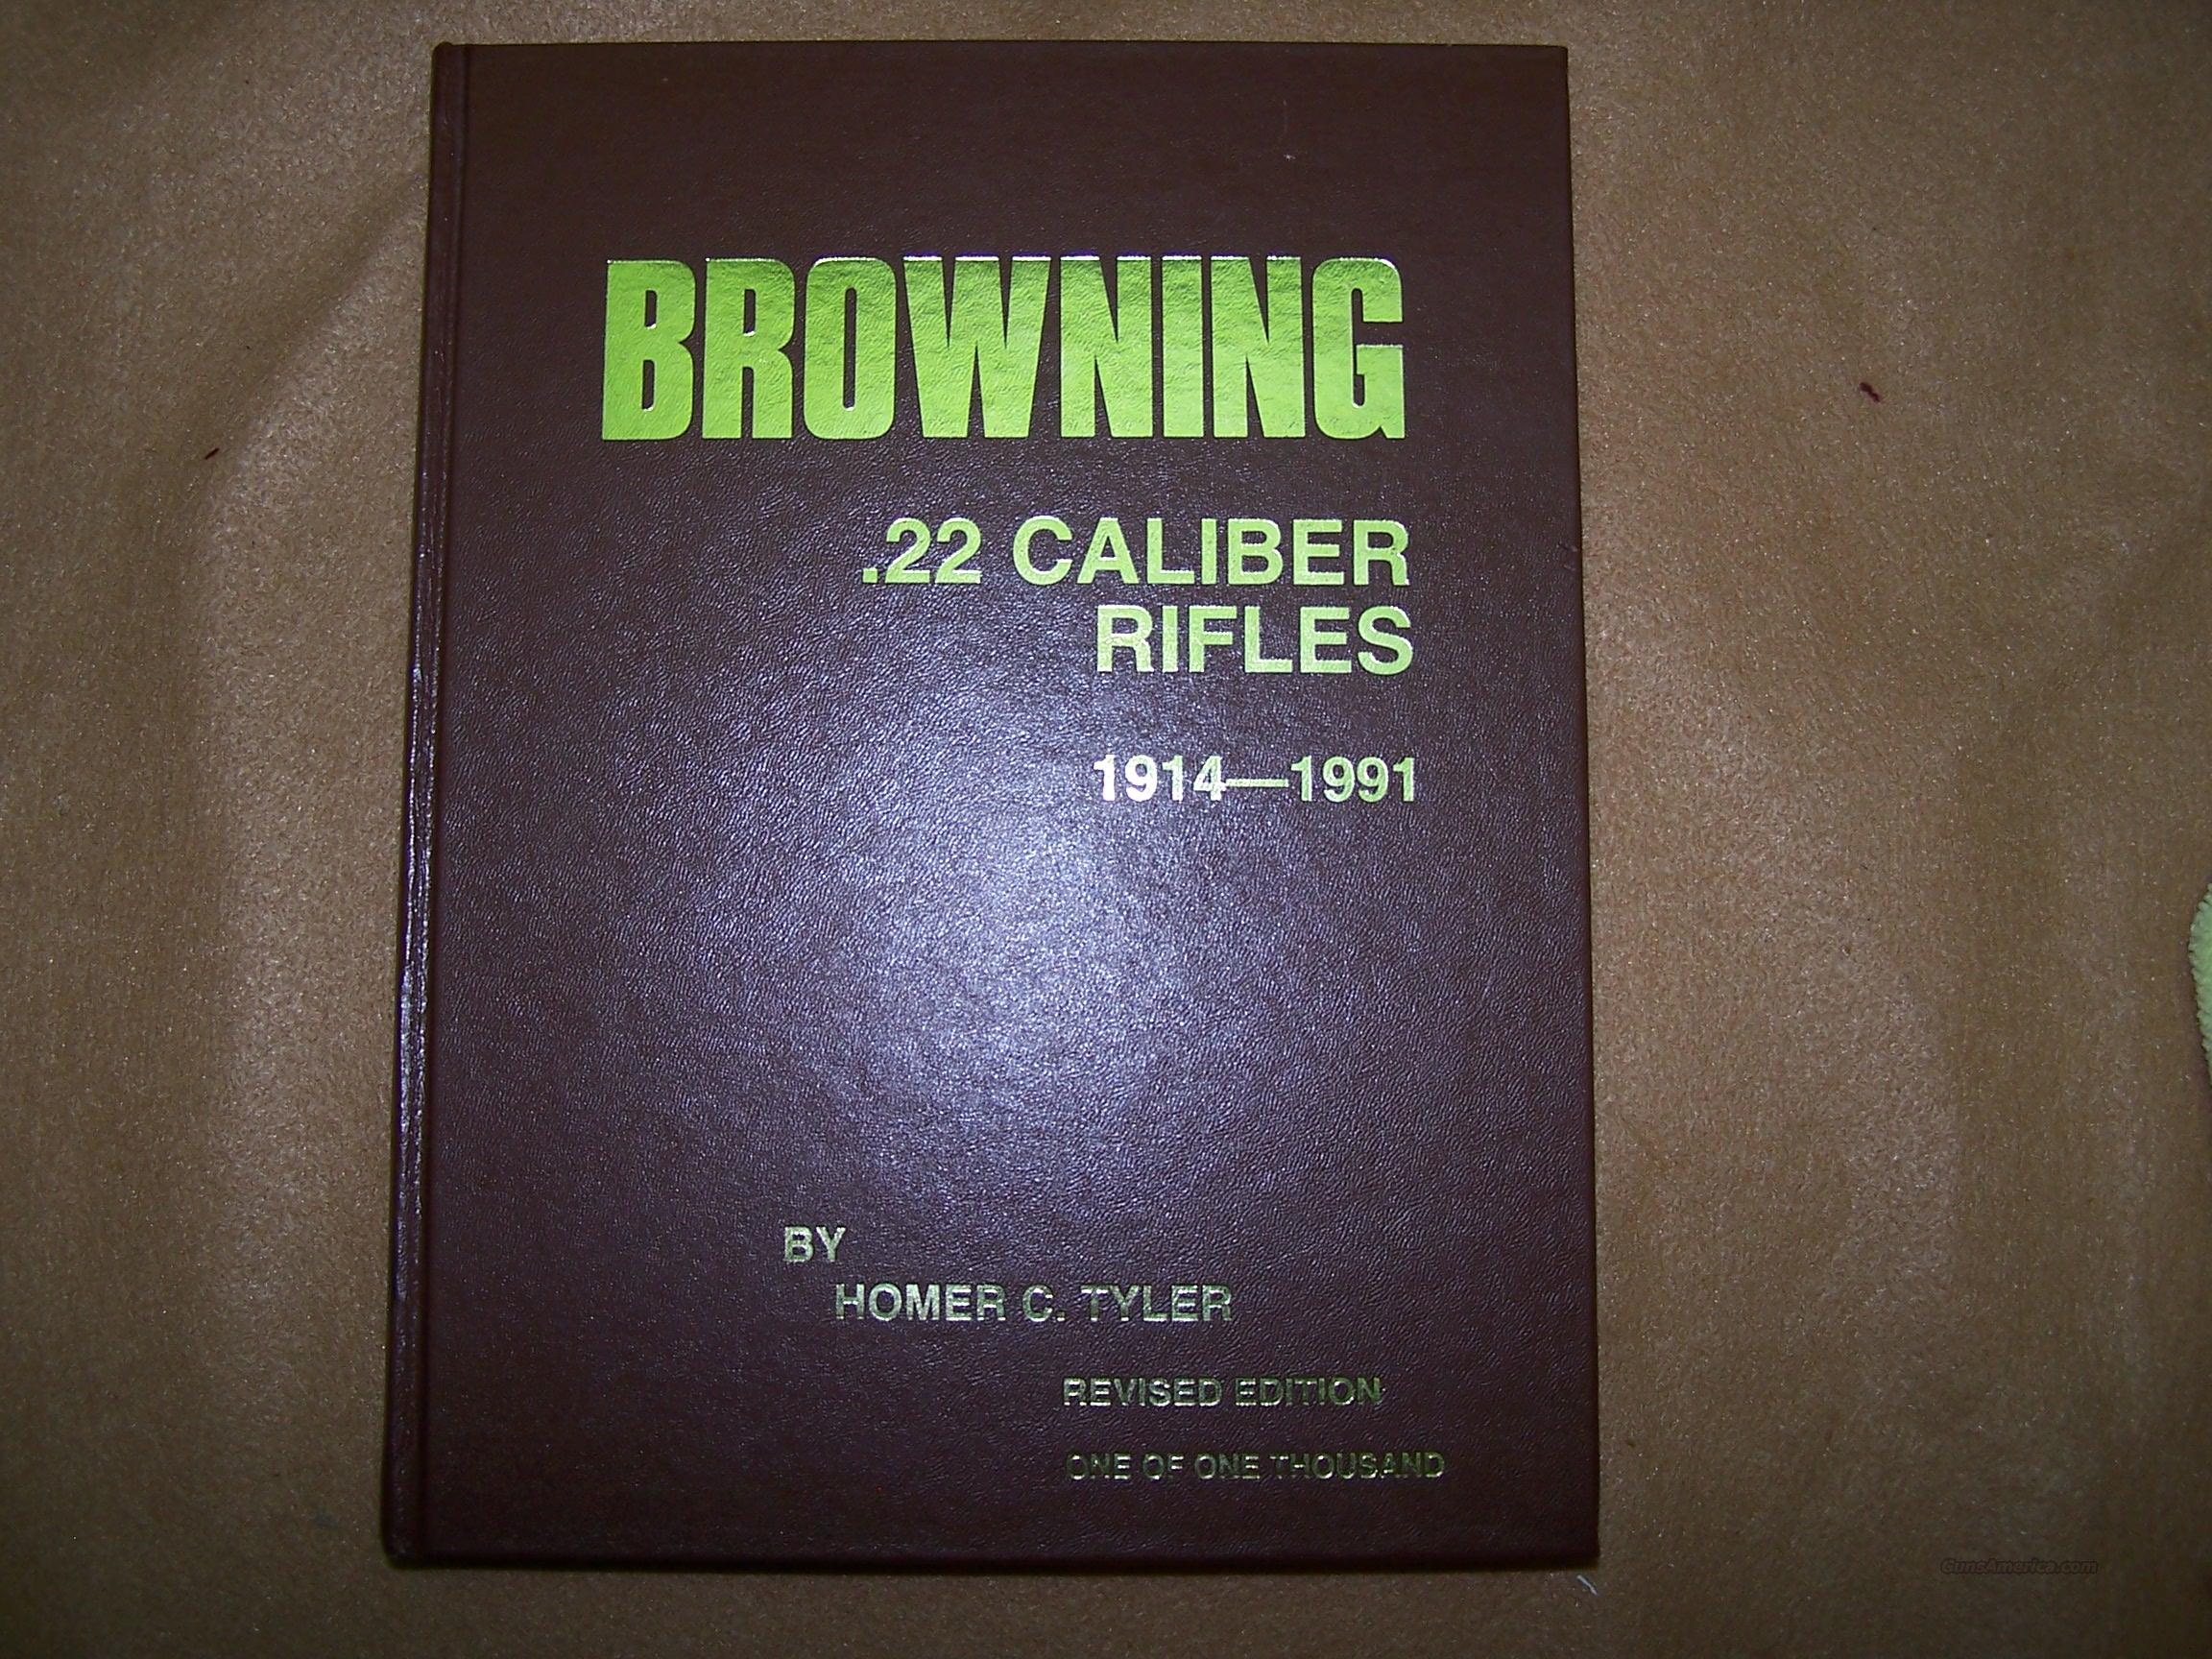 BROWNING .22 CAL RIFLES 1914-1991 b... for sale at Gunsamerica.com ...